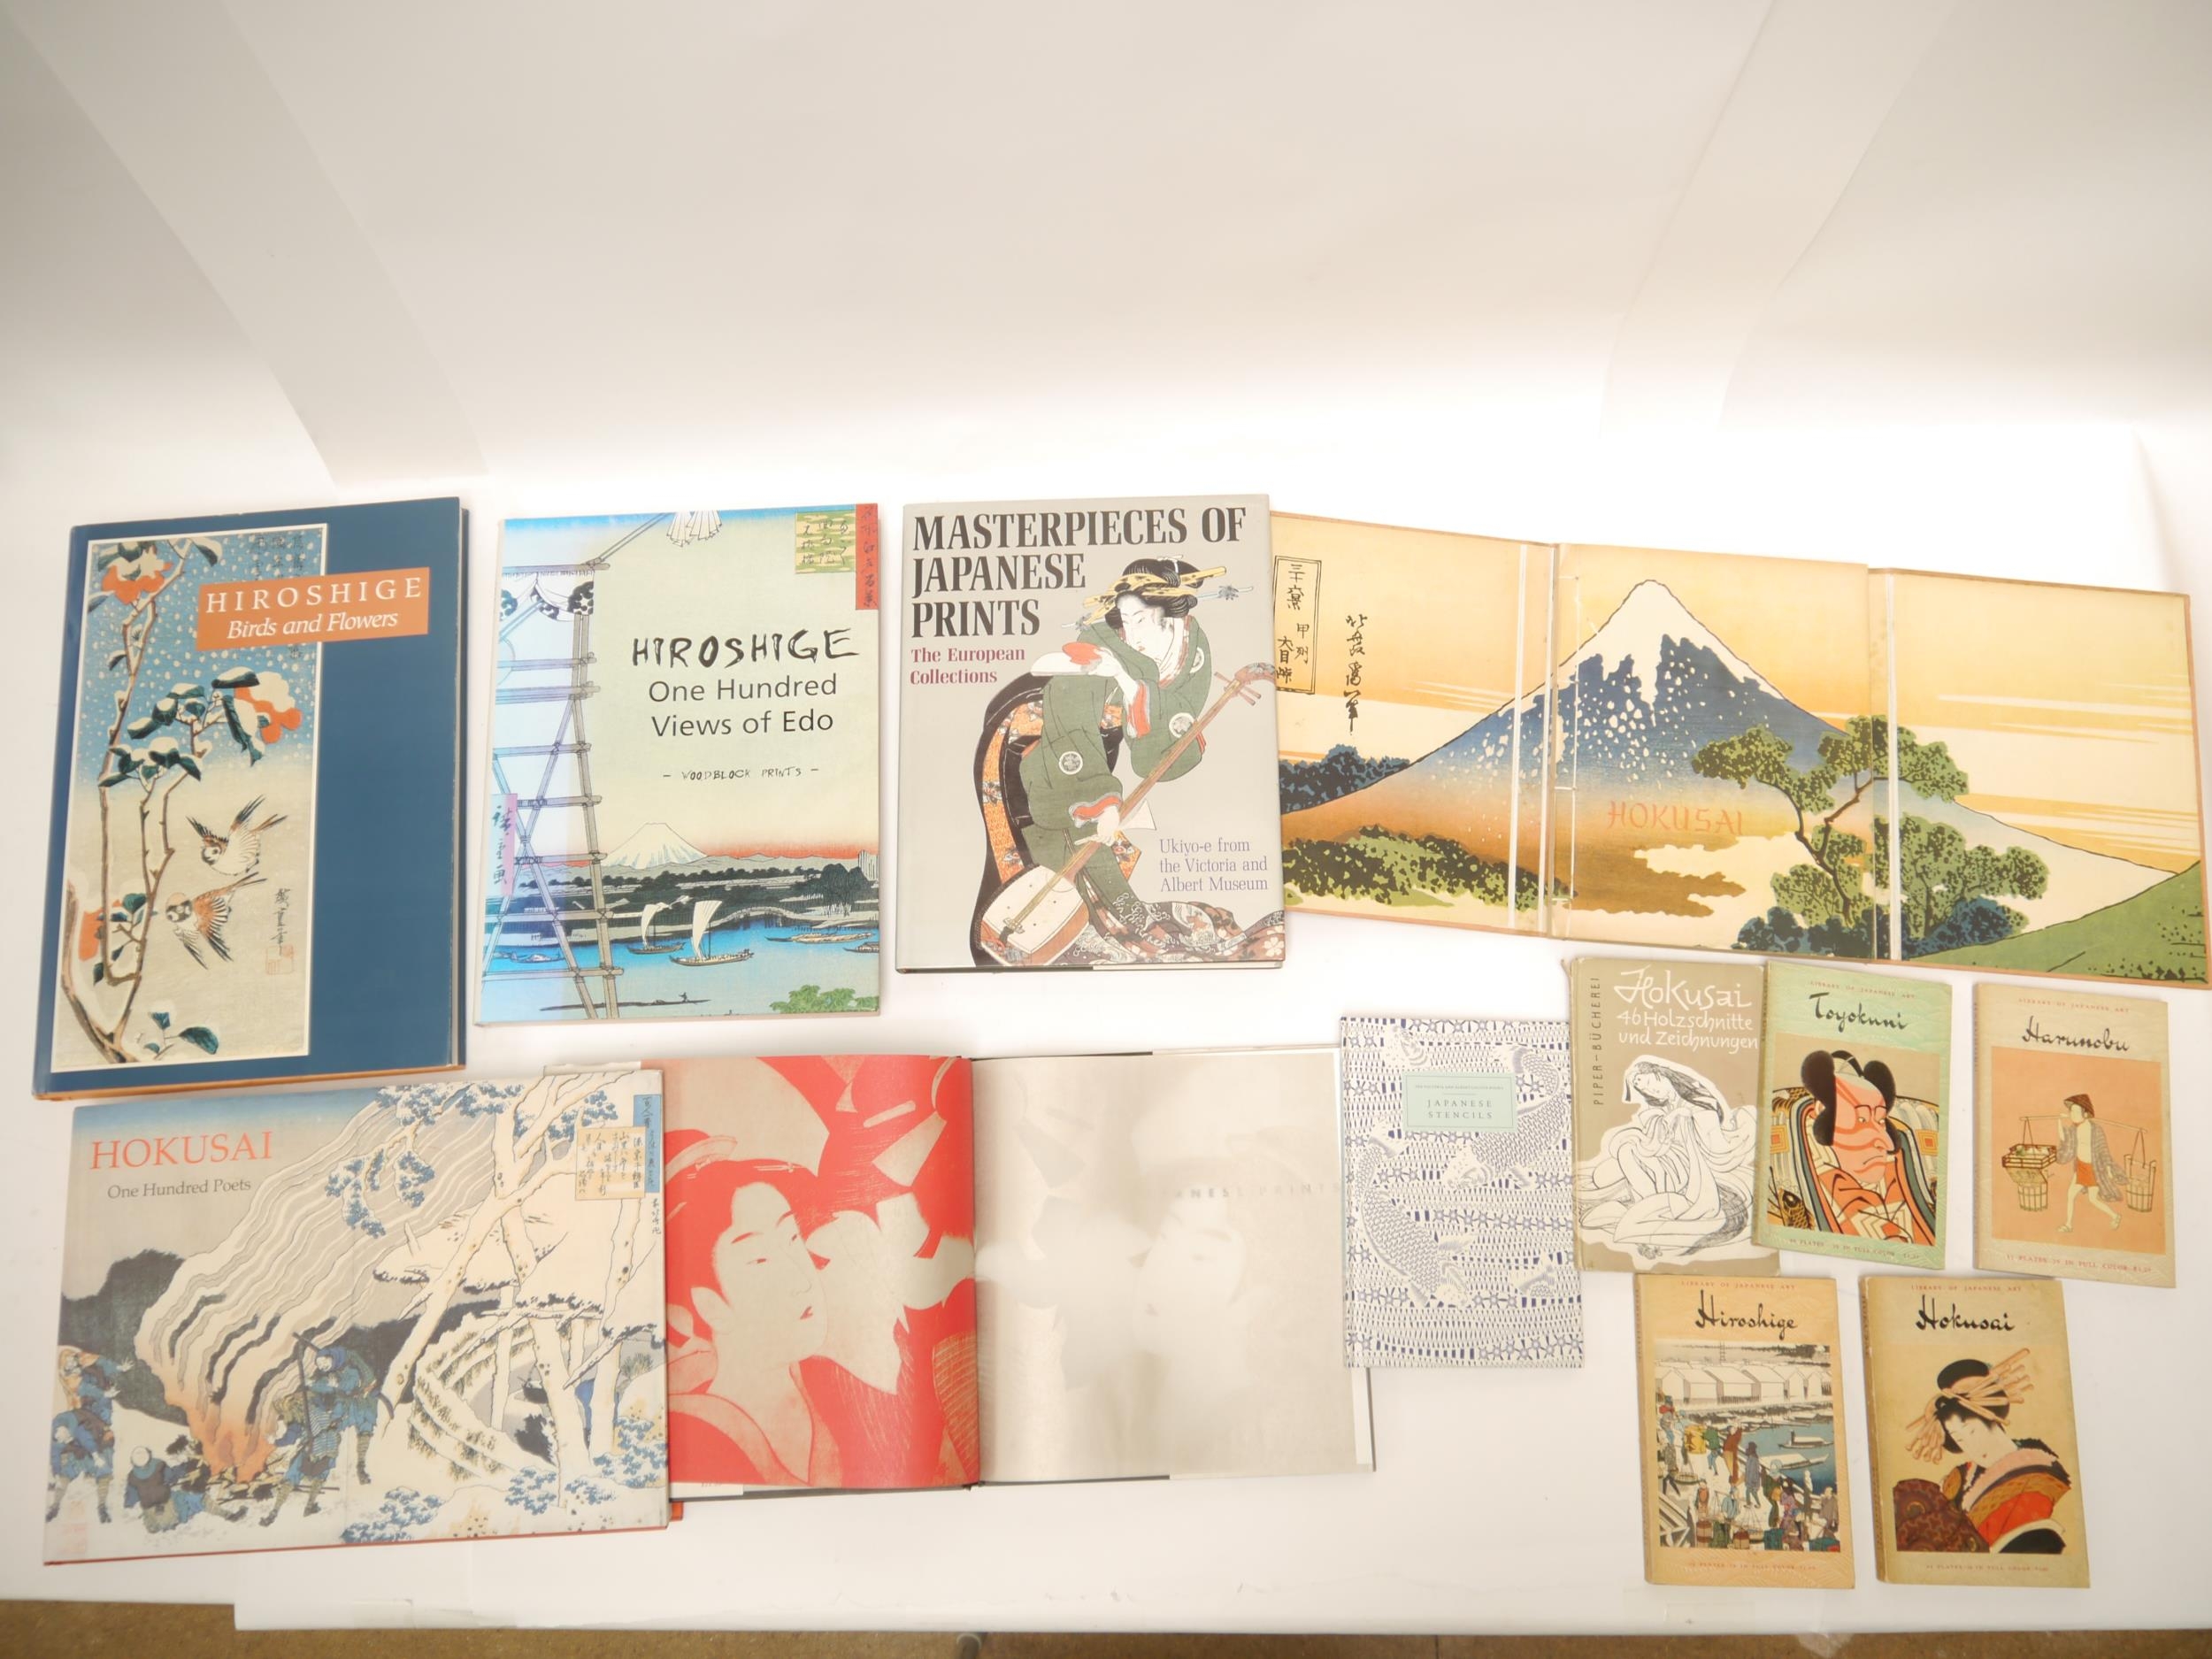 (Hokusai, Hiroshige, Ukiyo-e.) A collection of 12 assorted Japanese art titles, including Peter - Image 2 of 3